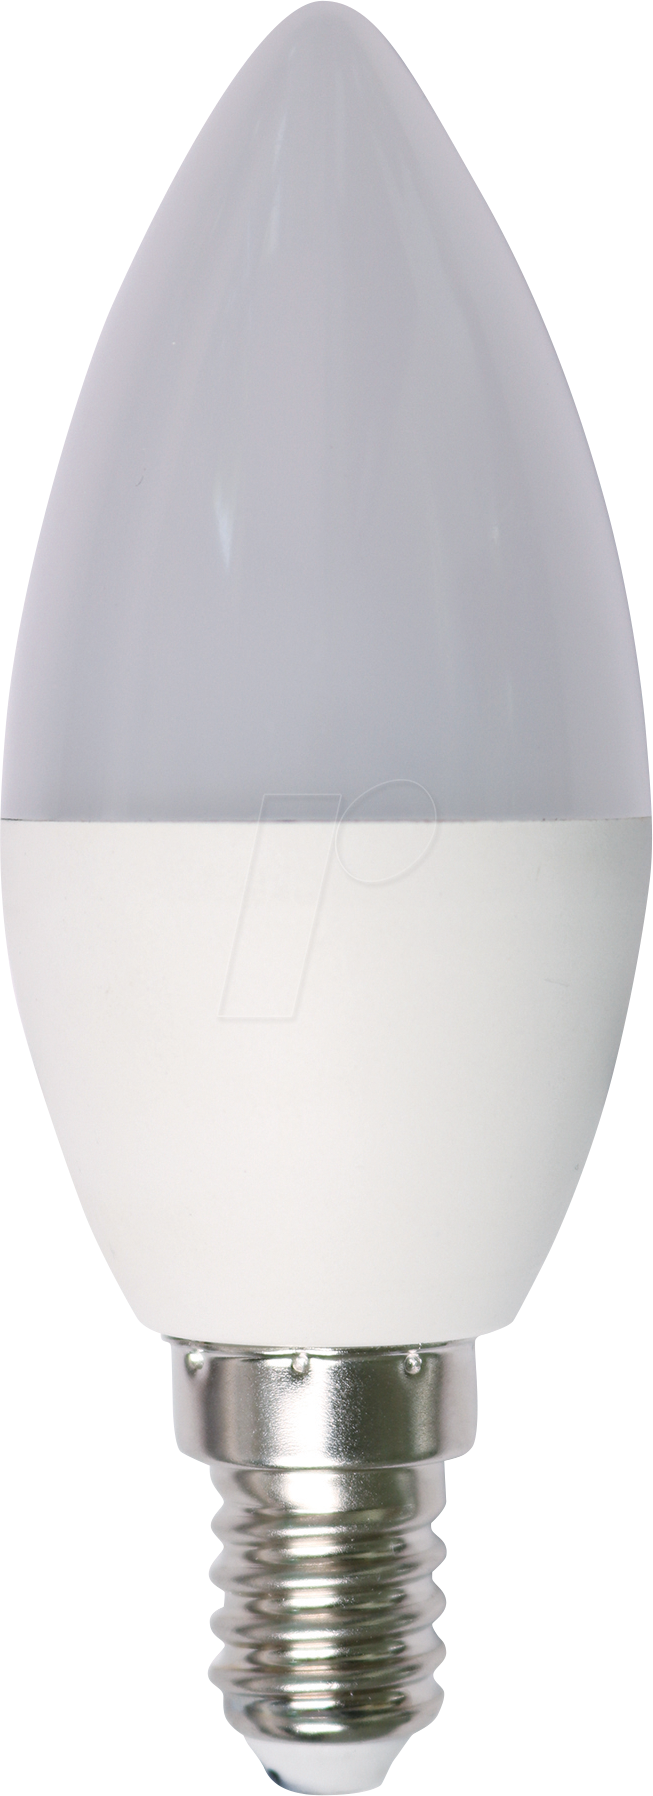 EURL 26CRY00019 - LED-Lampe E14, 4 W, 360 lm, 3000 K, dimmbar, Ra98, Vollspektrum von EUROLIGHTING